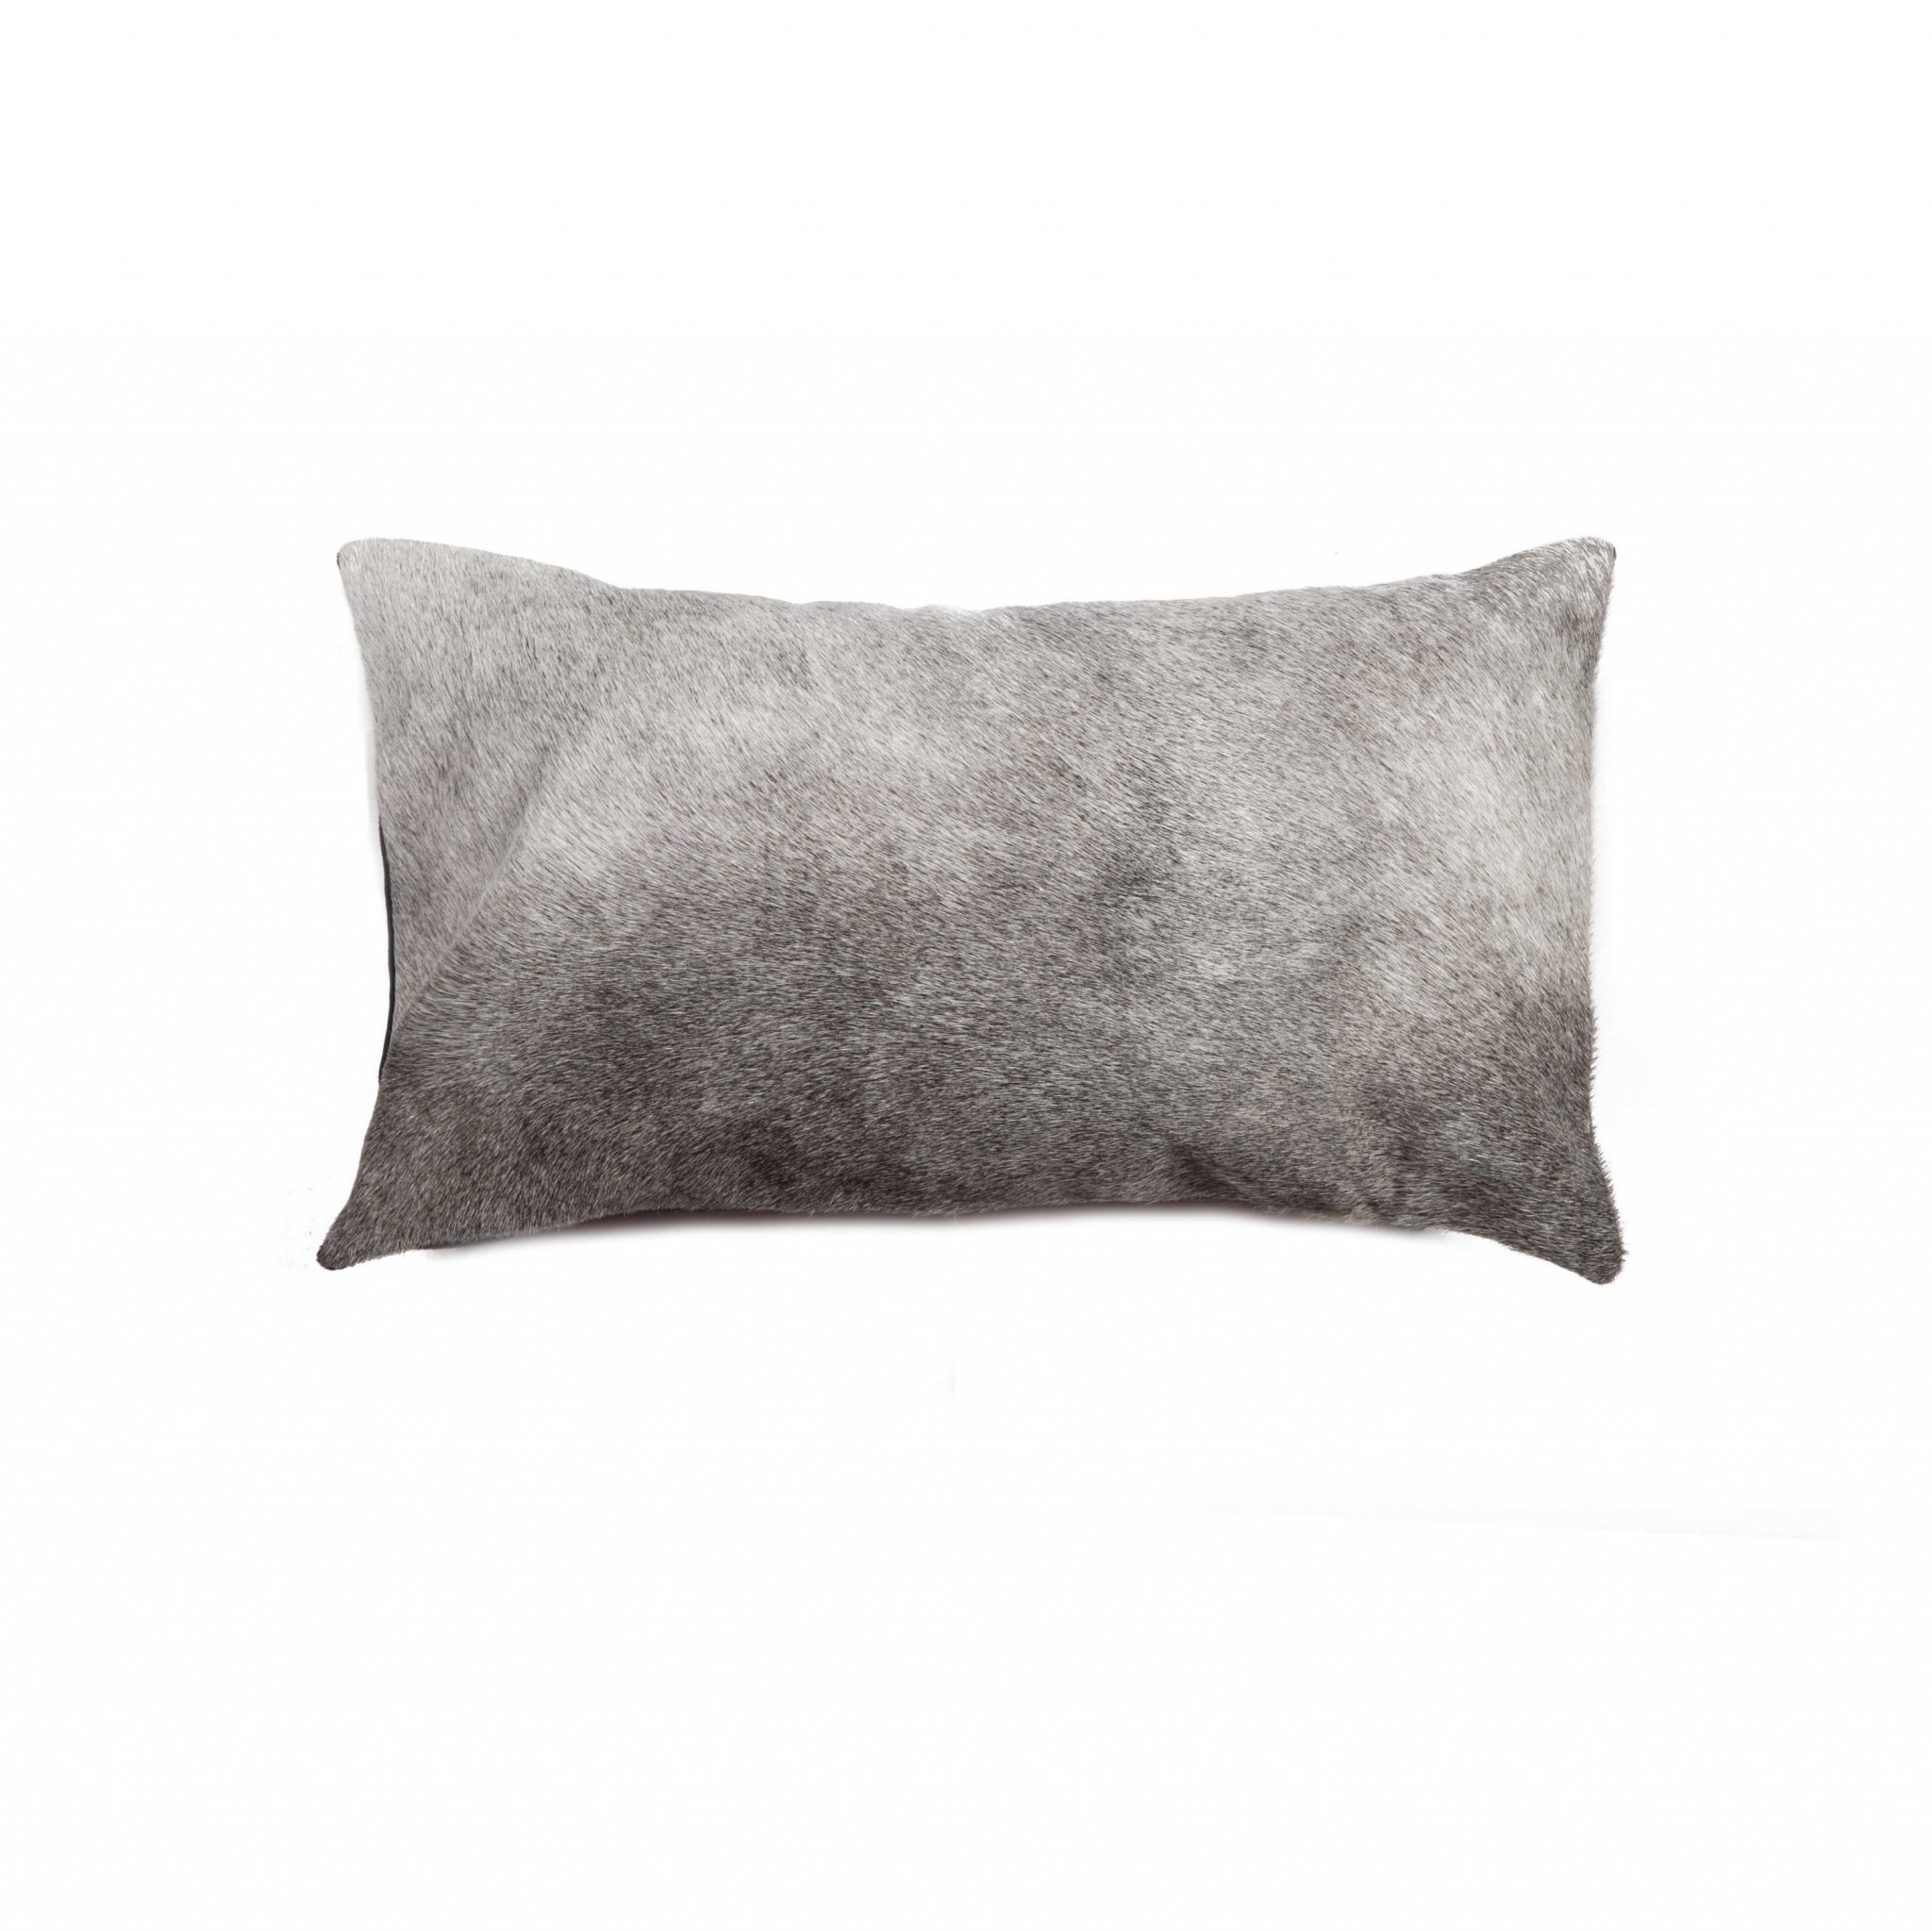 12" x 20" x 5" Grey, Torino Kobe Cowhide - Pillow